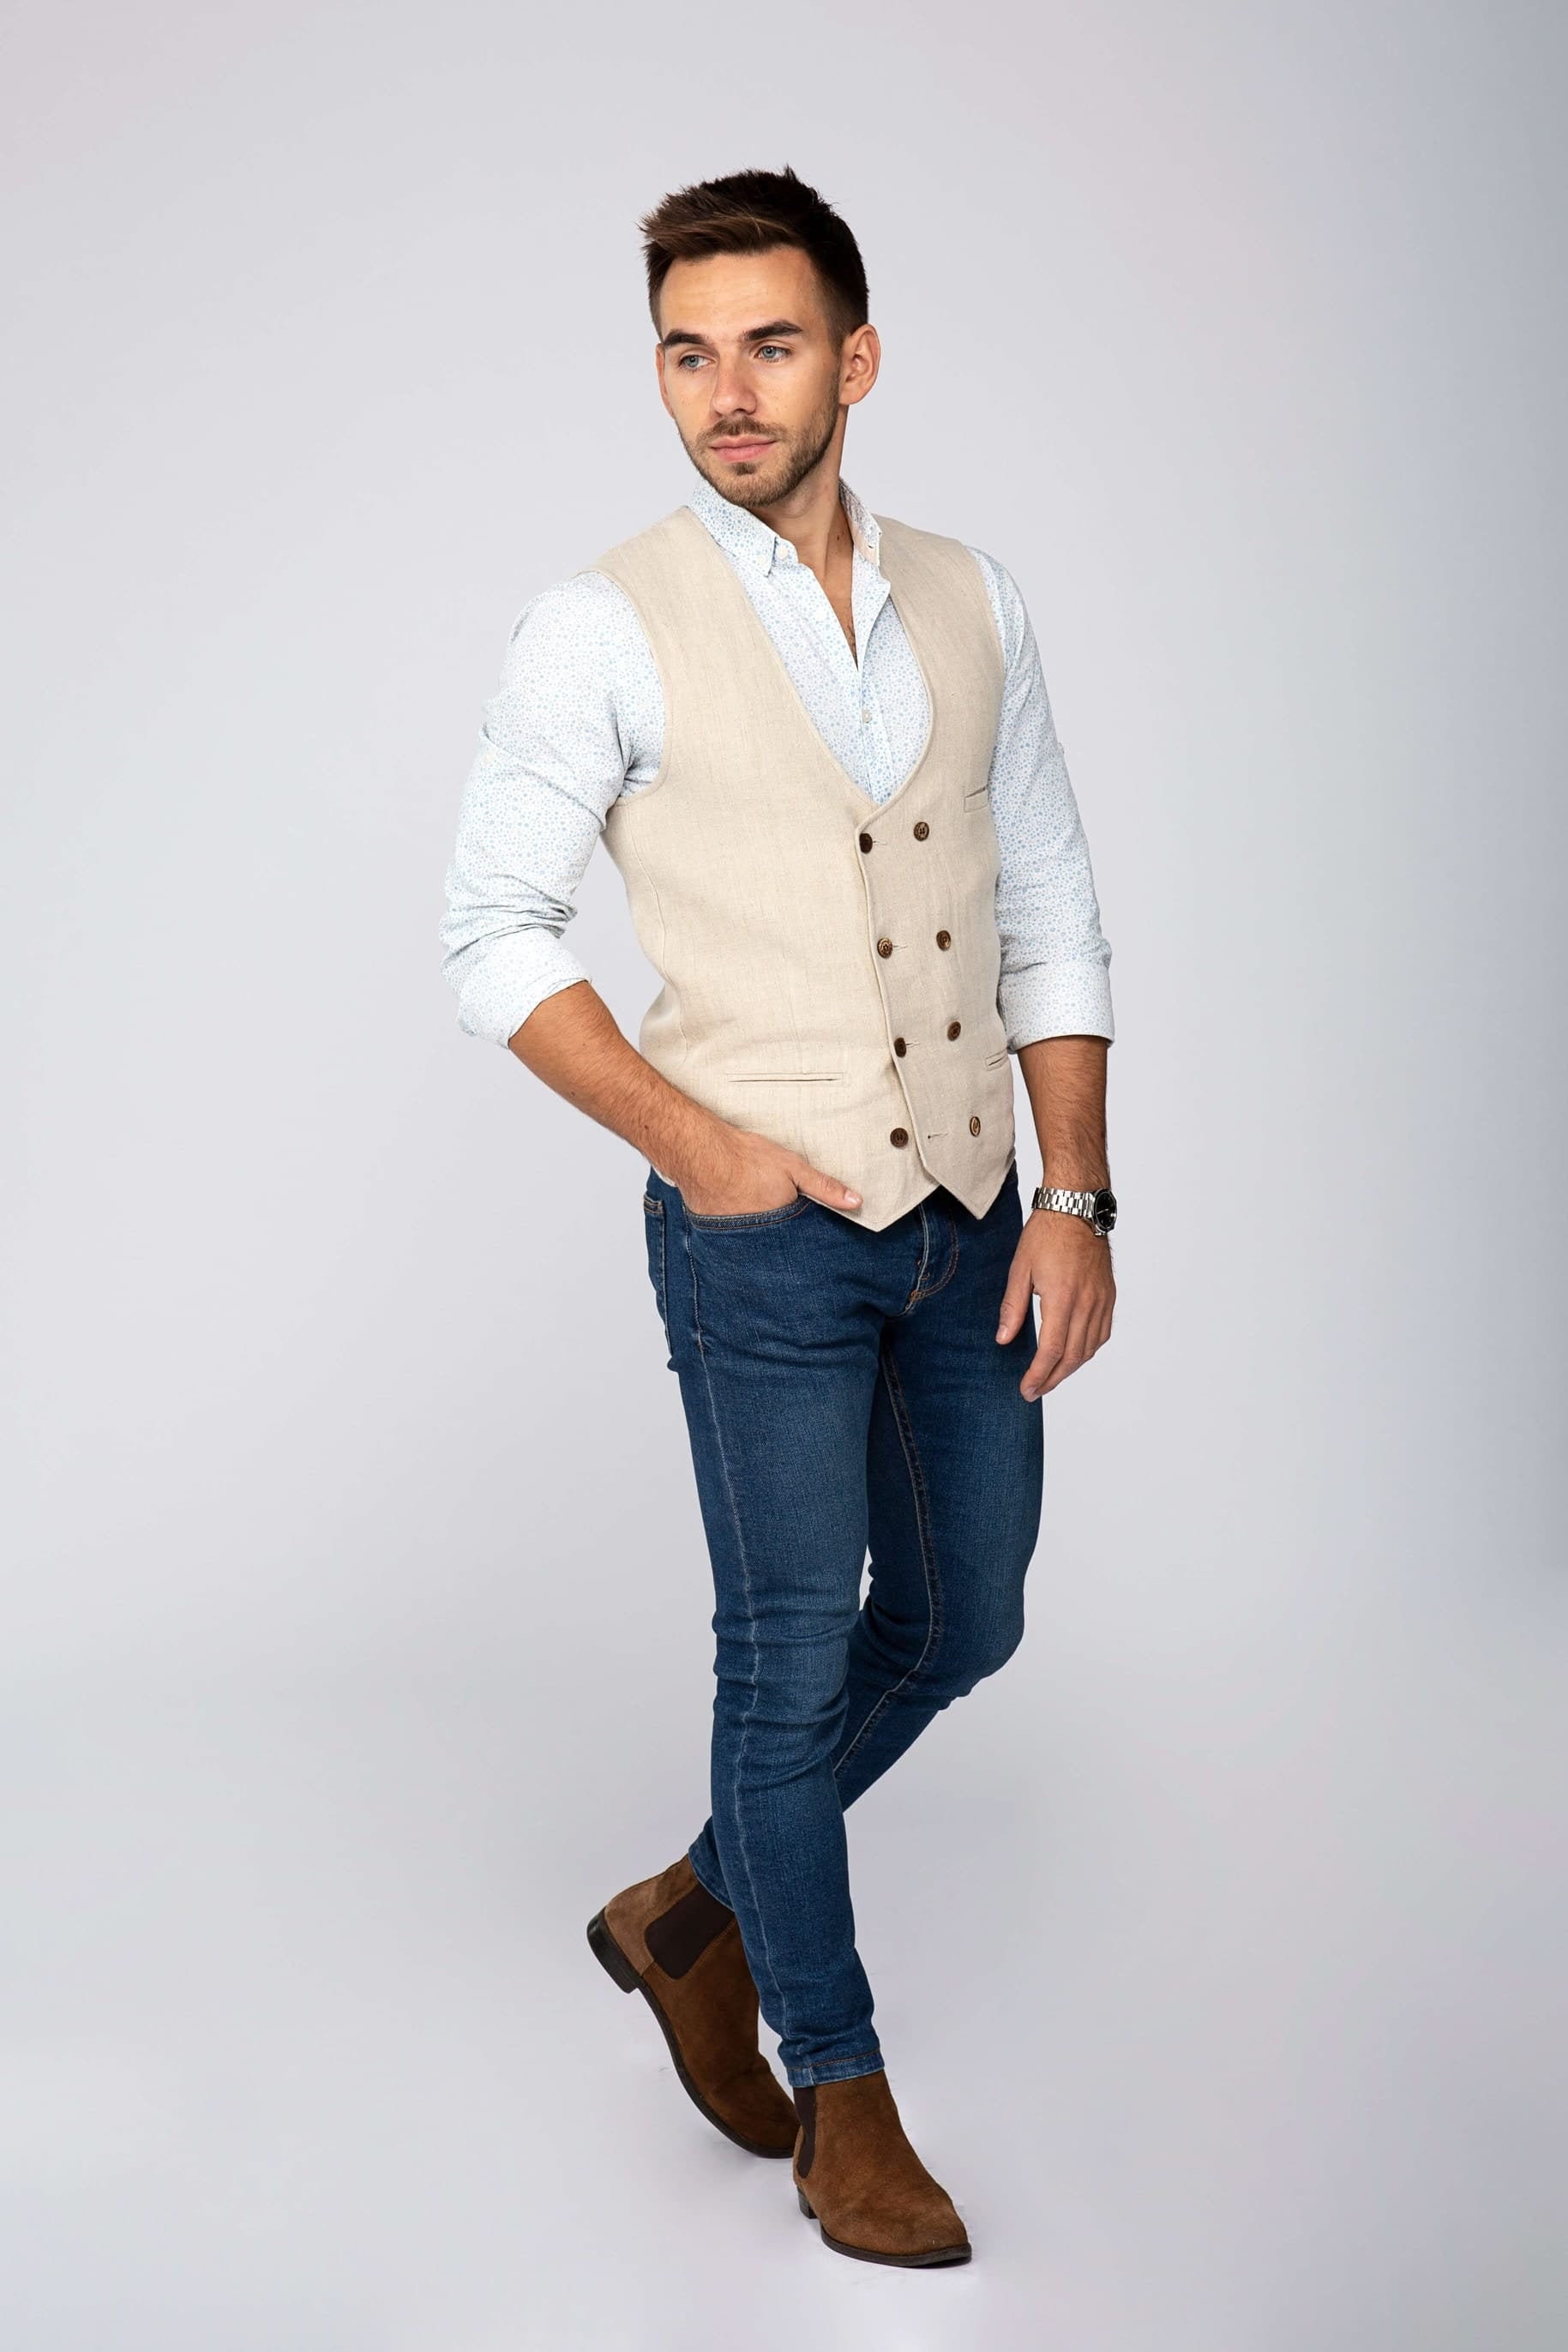 100% Hemp Waistcoat Men's Vest Men's Fashion | Etsy